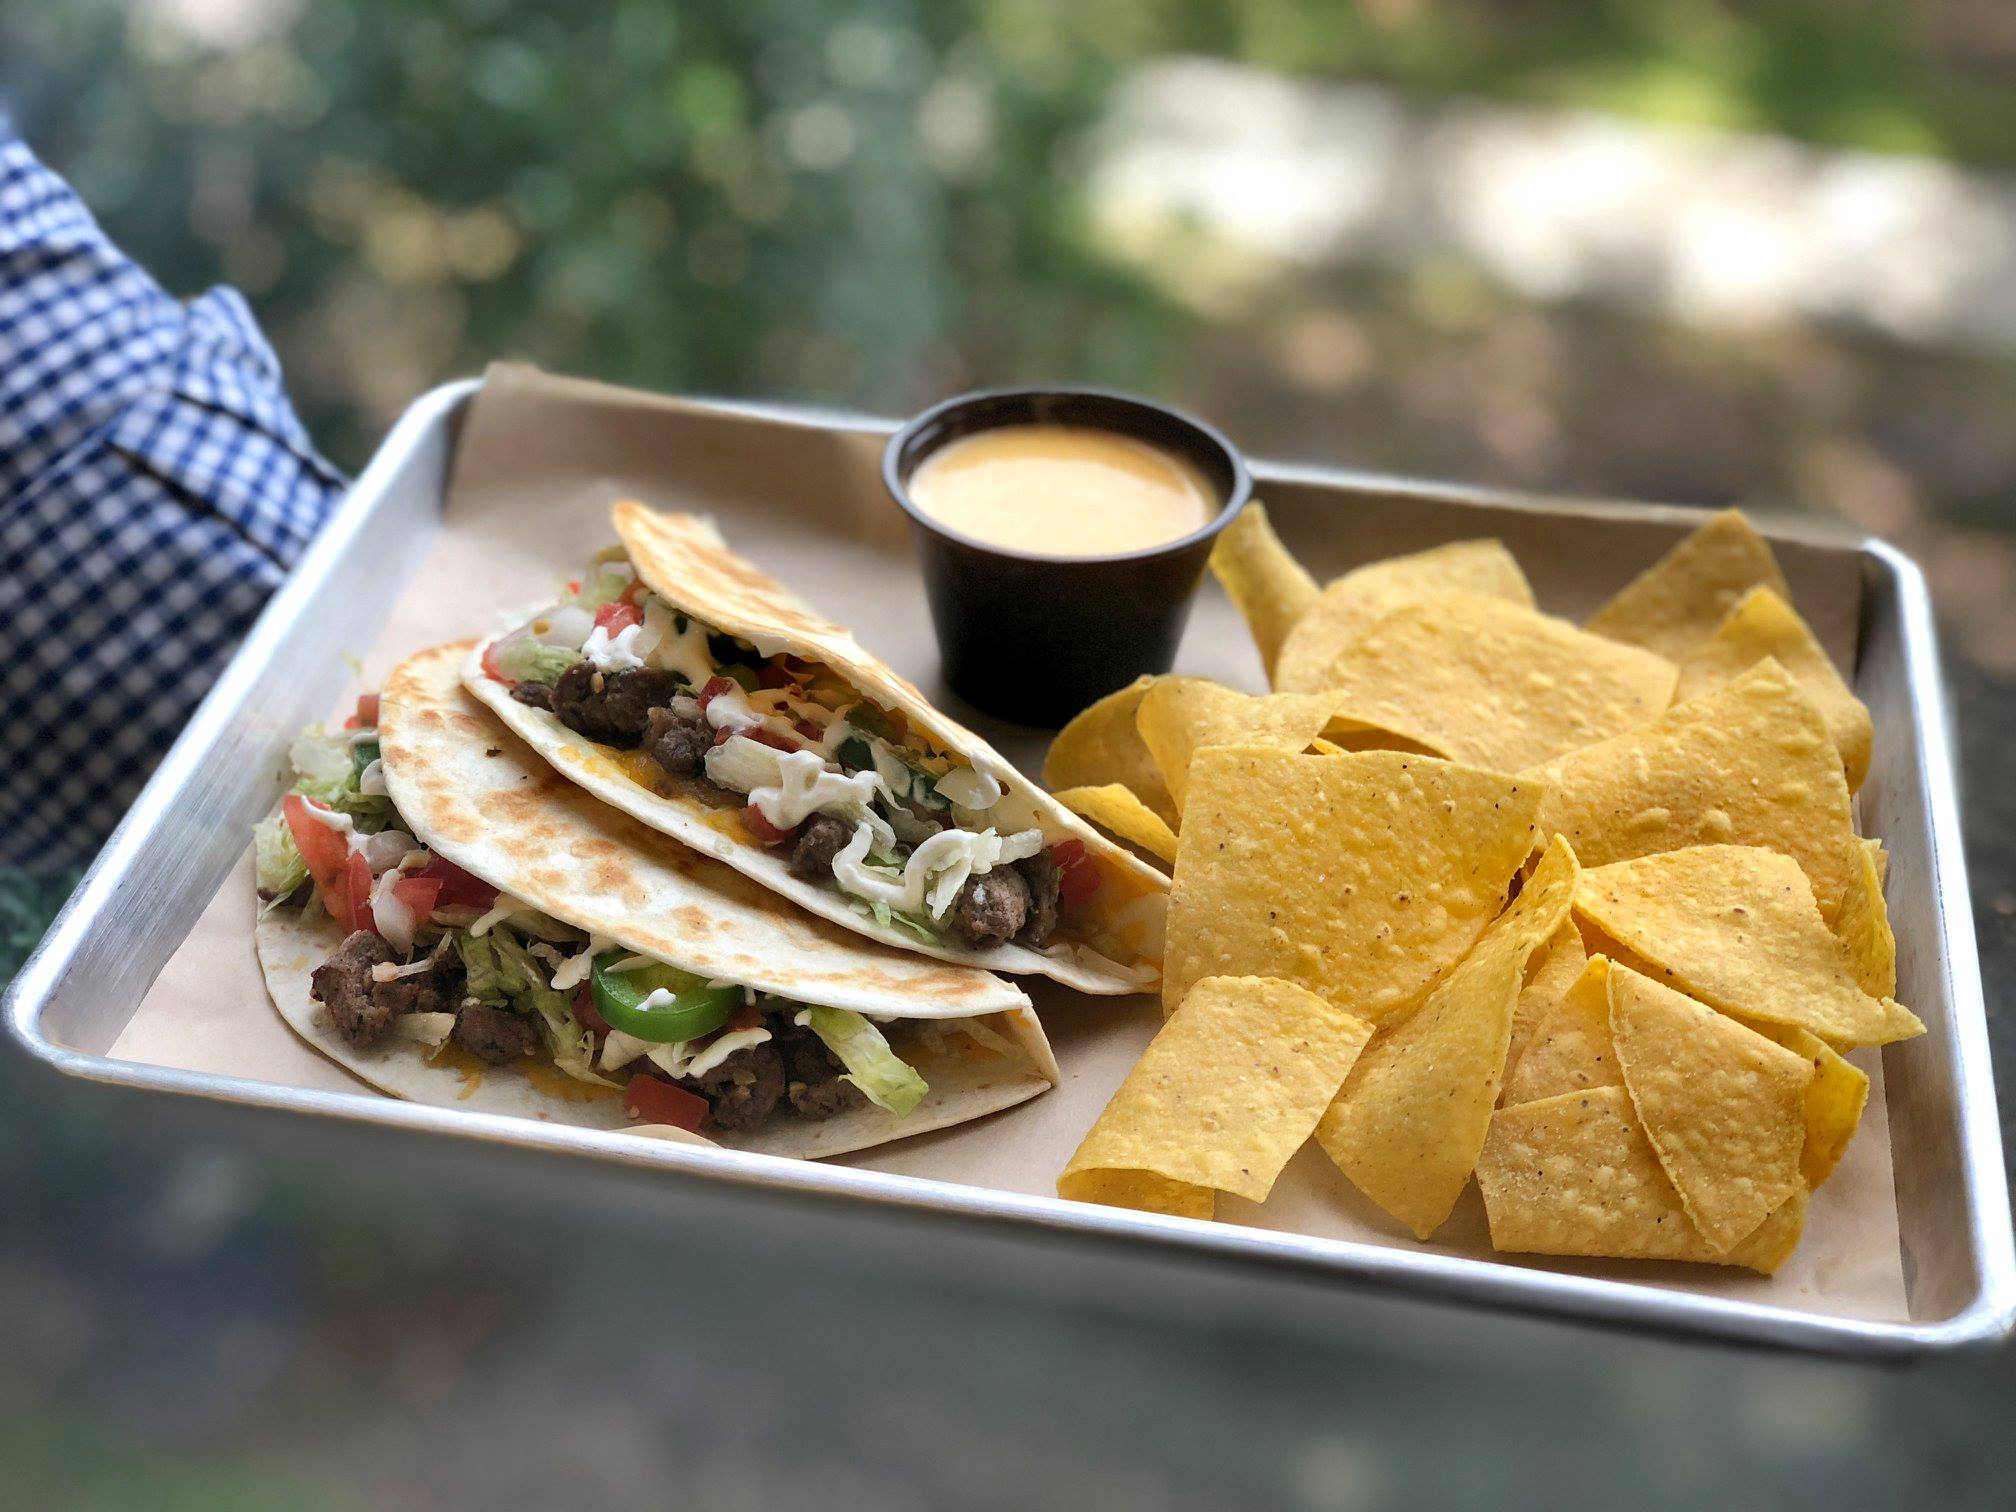 National Taco Day Free Food and Deals 2018 – Tijuana Flats Taco Day deals